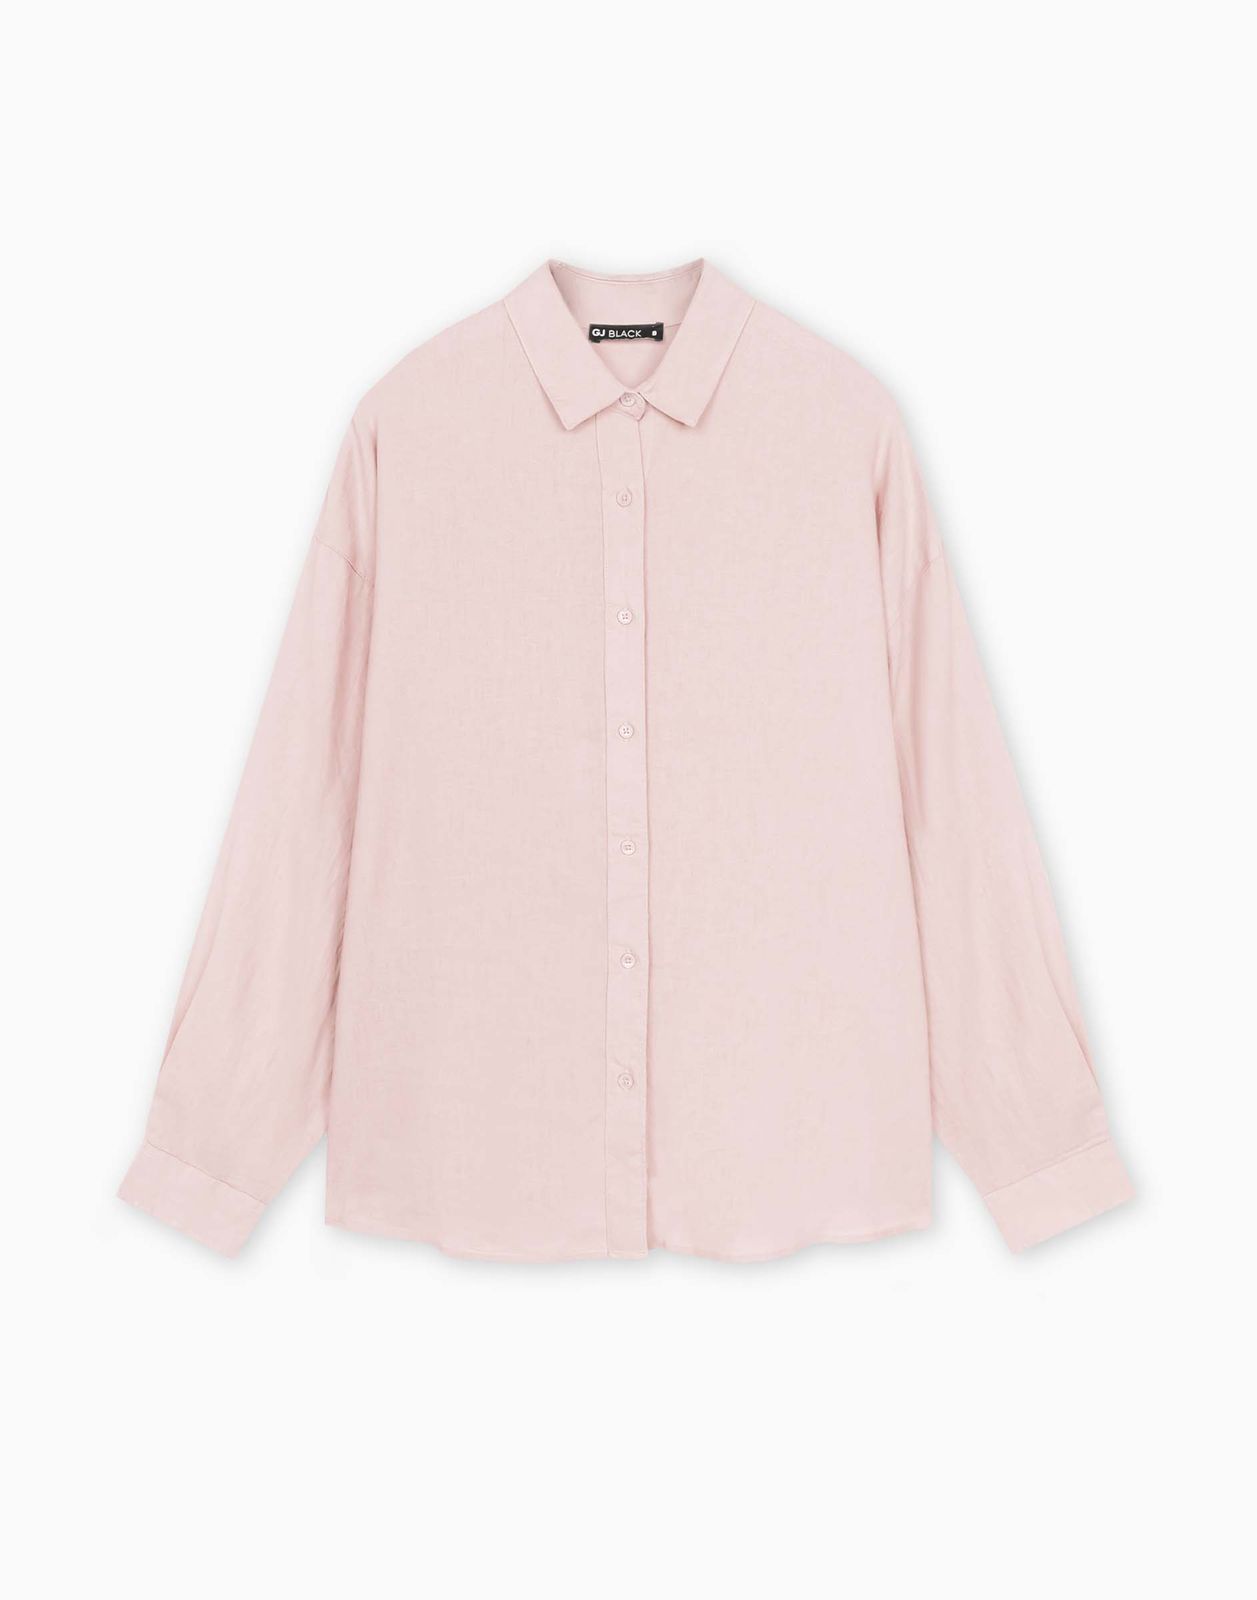 Рубашка женская Gloria Jeans GWT003968 светло-розовый XL/170